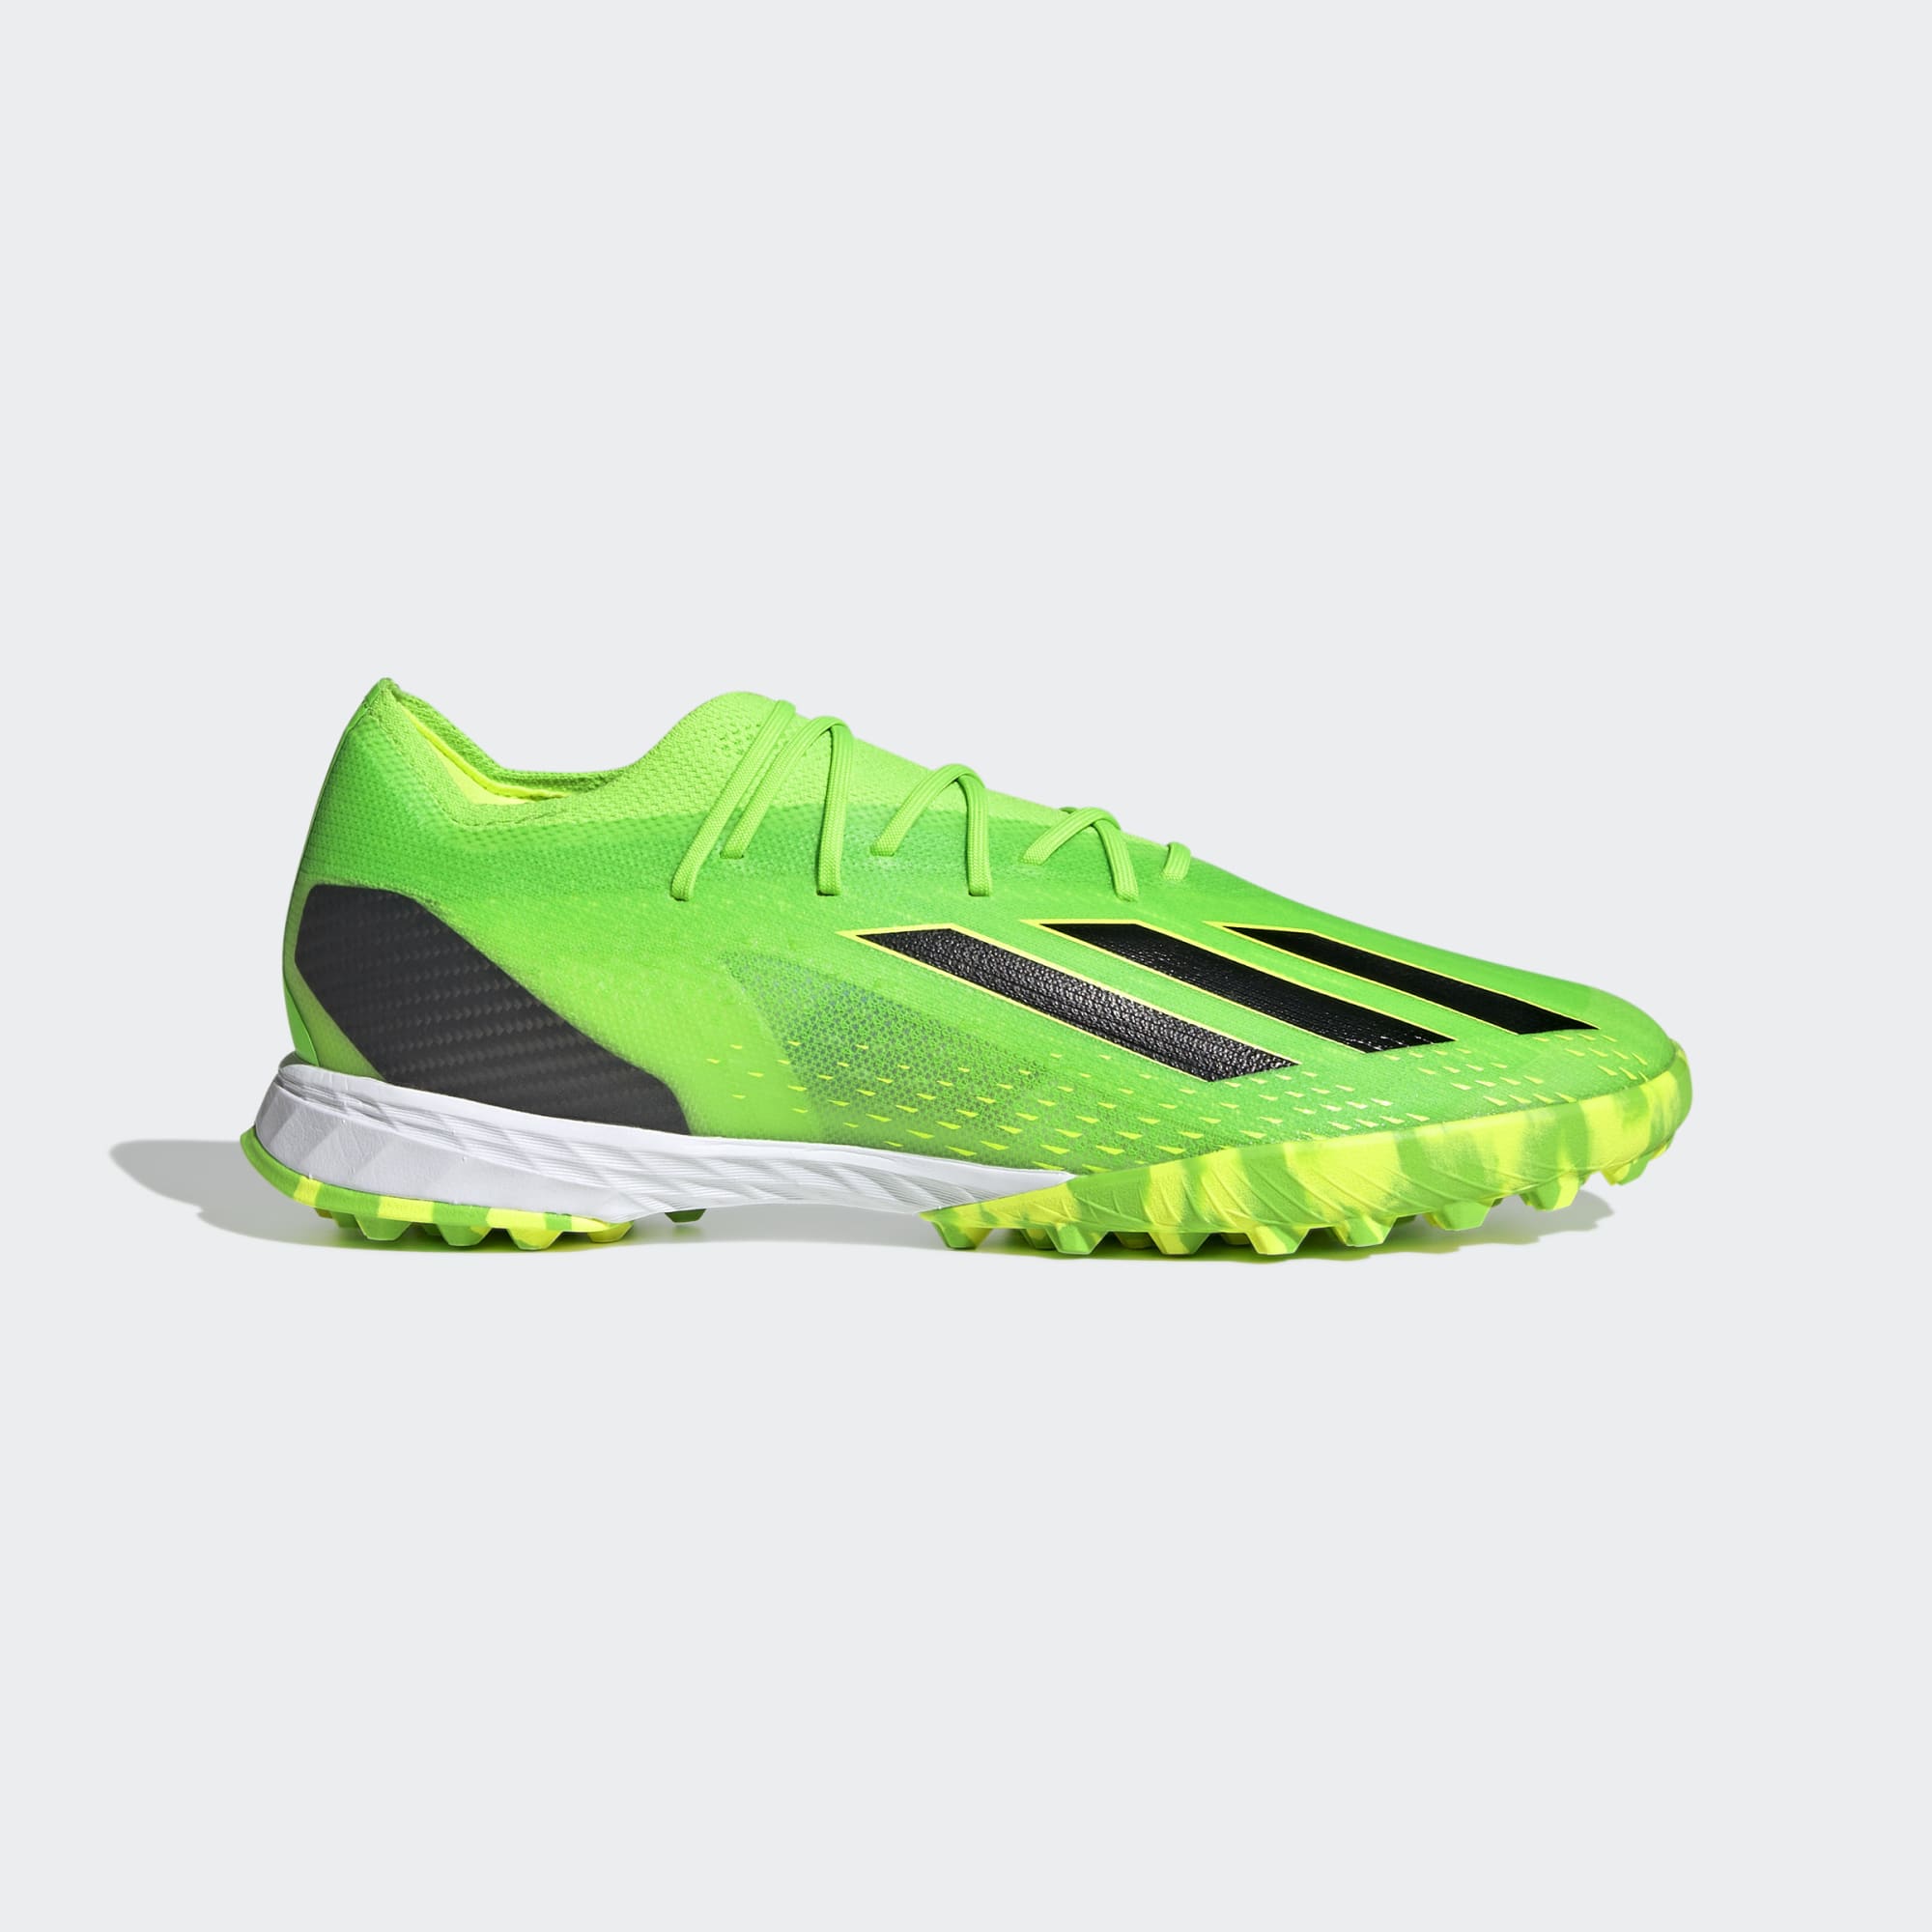 stefanssoccer.com:adidas X Turf soccer shoes - Solar Green